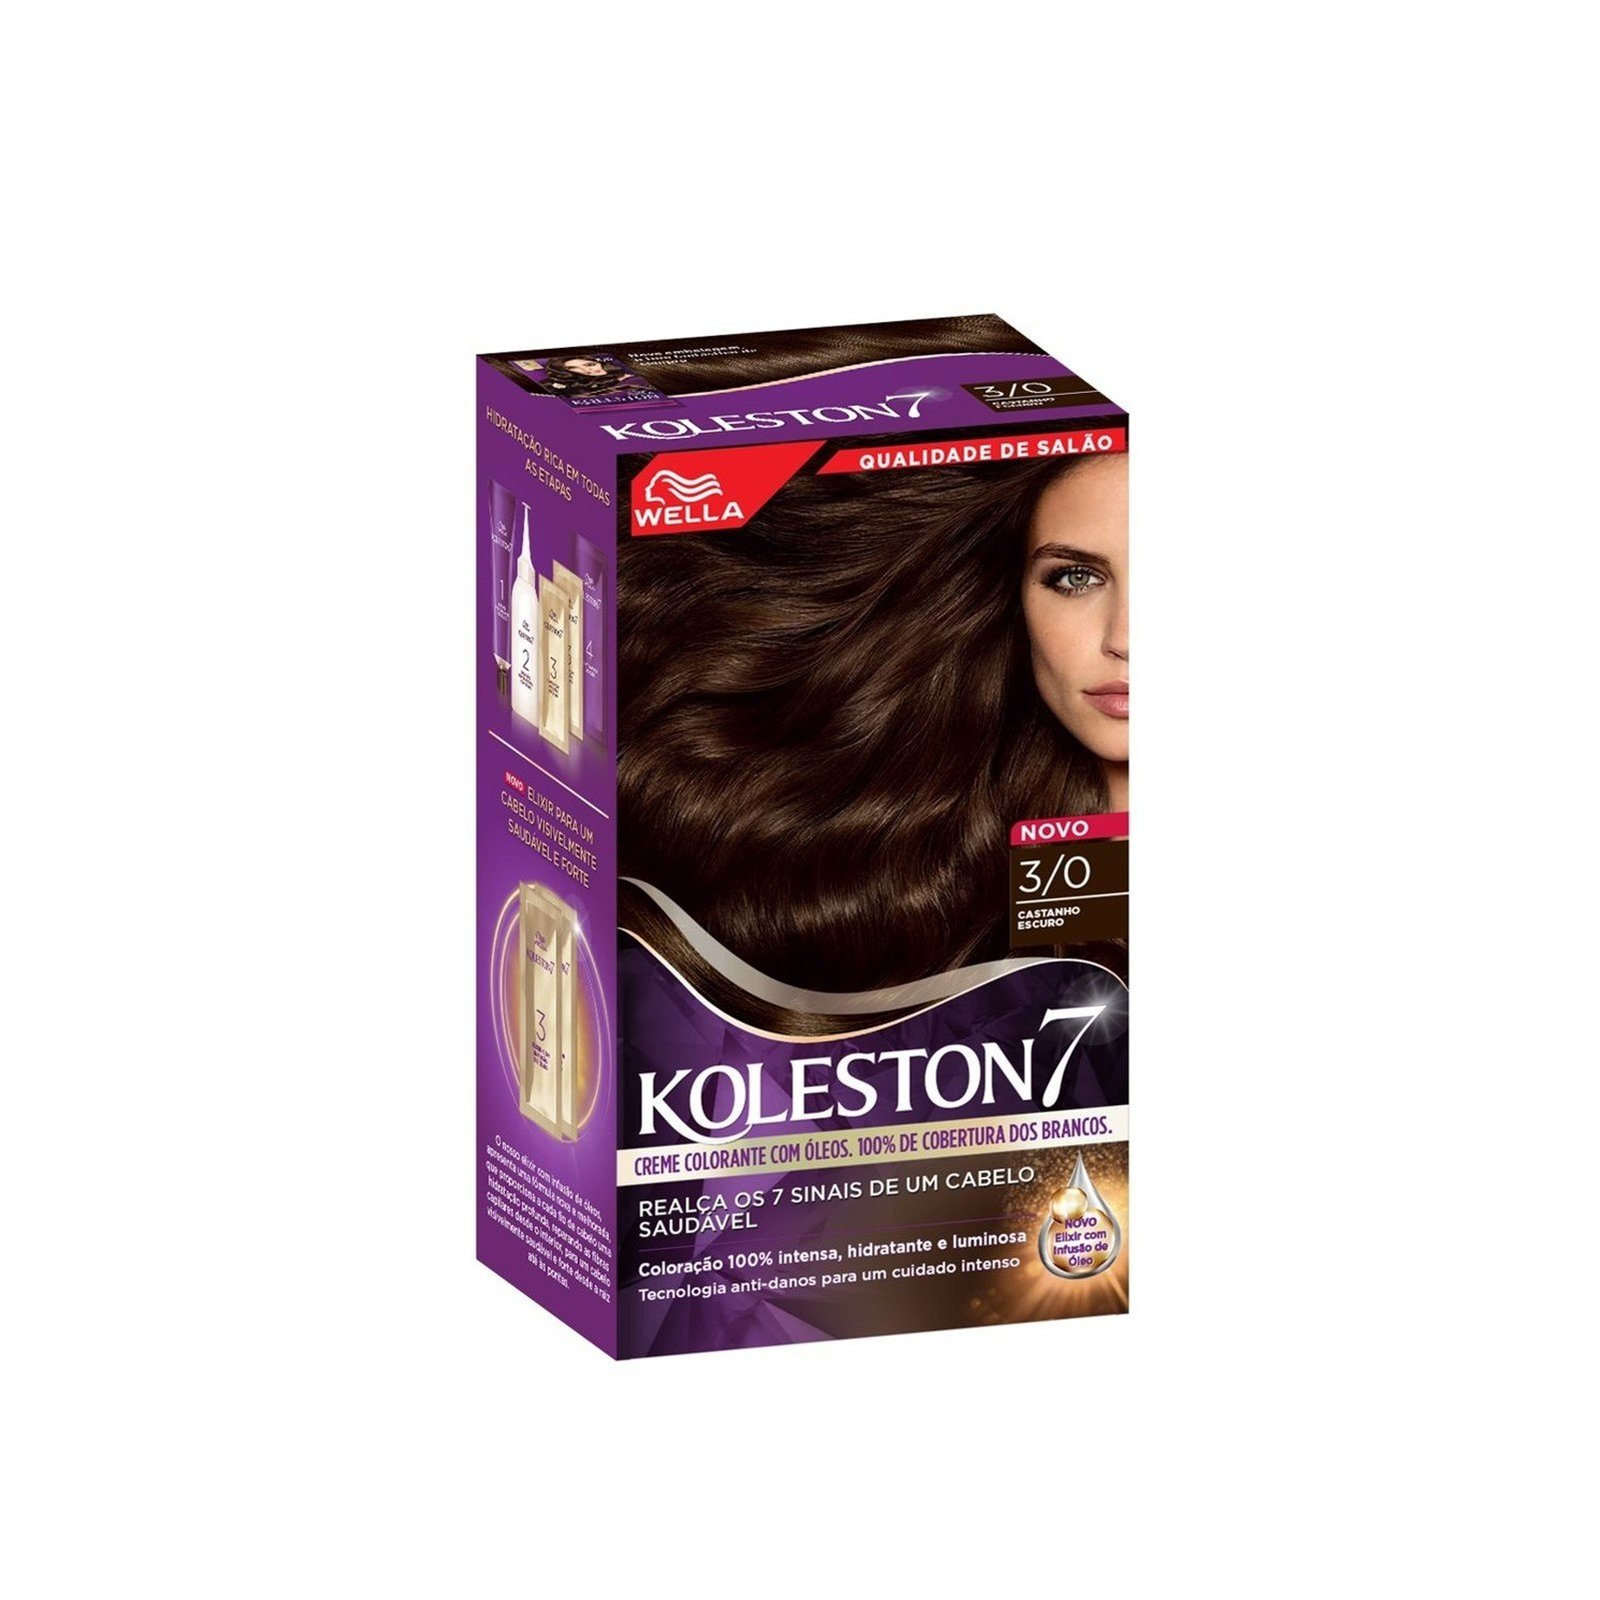 Wella Koleston 3/0 Dark Brown Permanent Hair Color